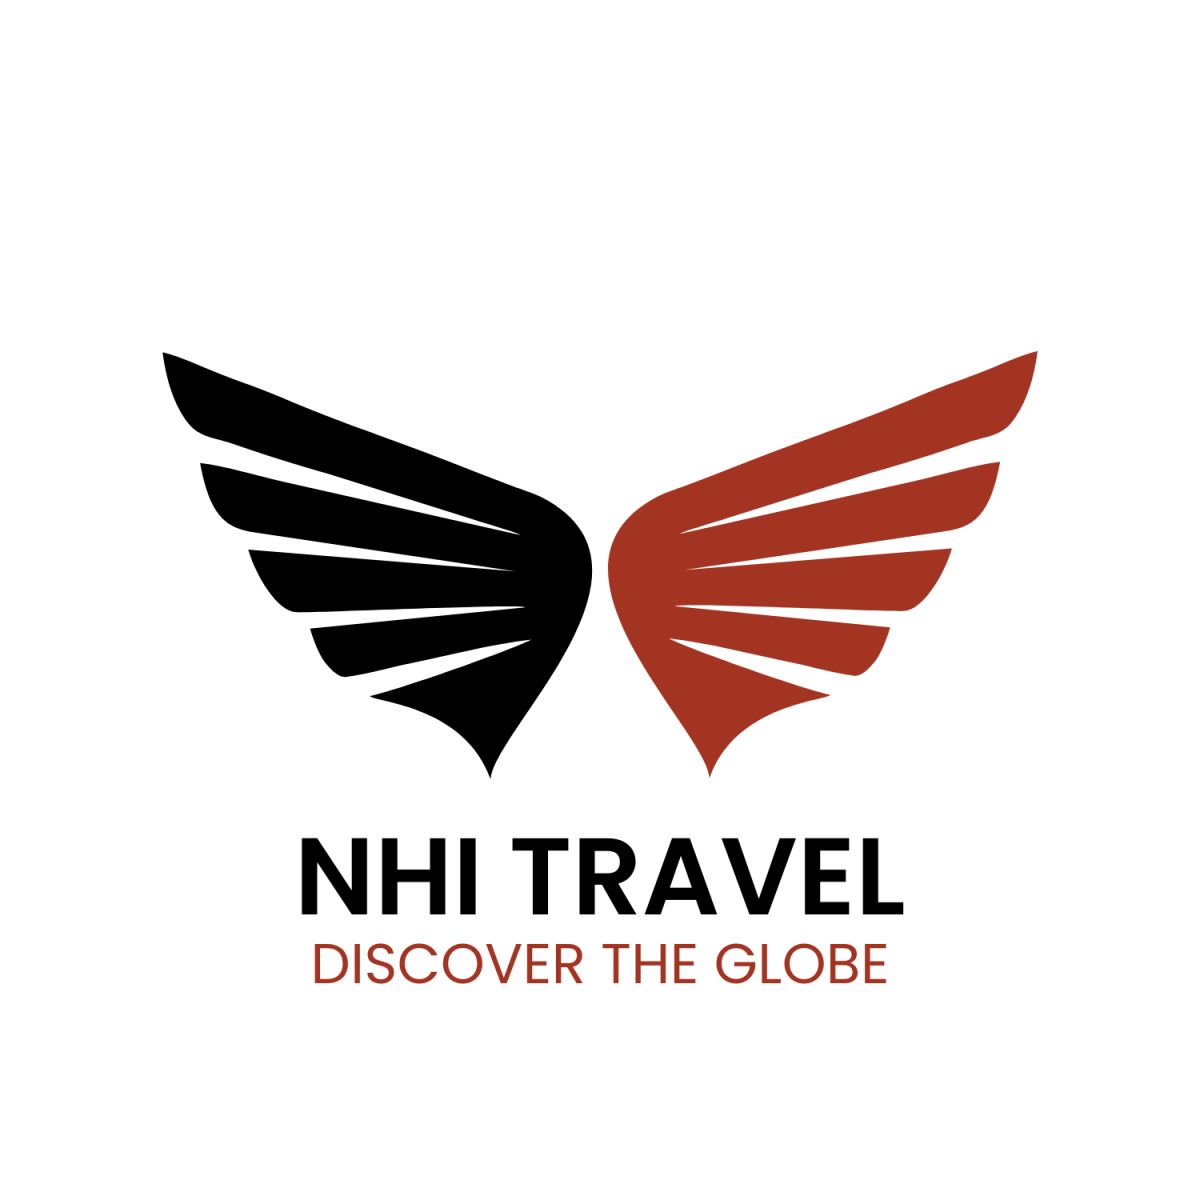 NHI Travel